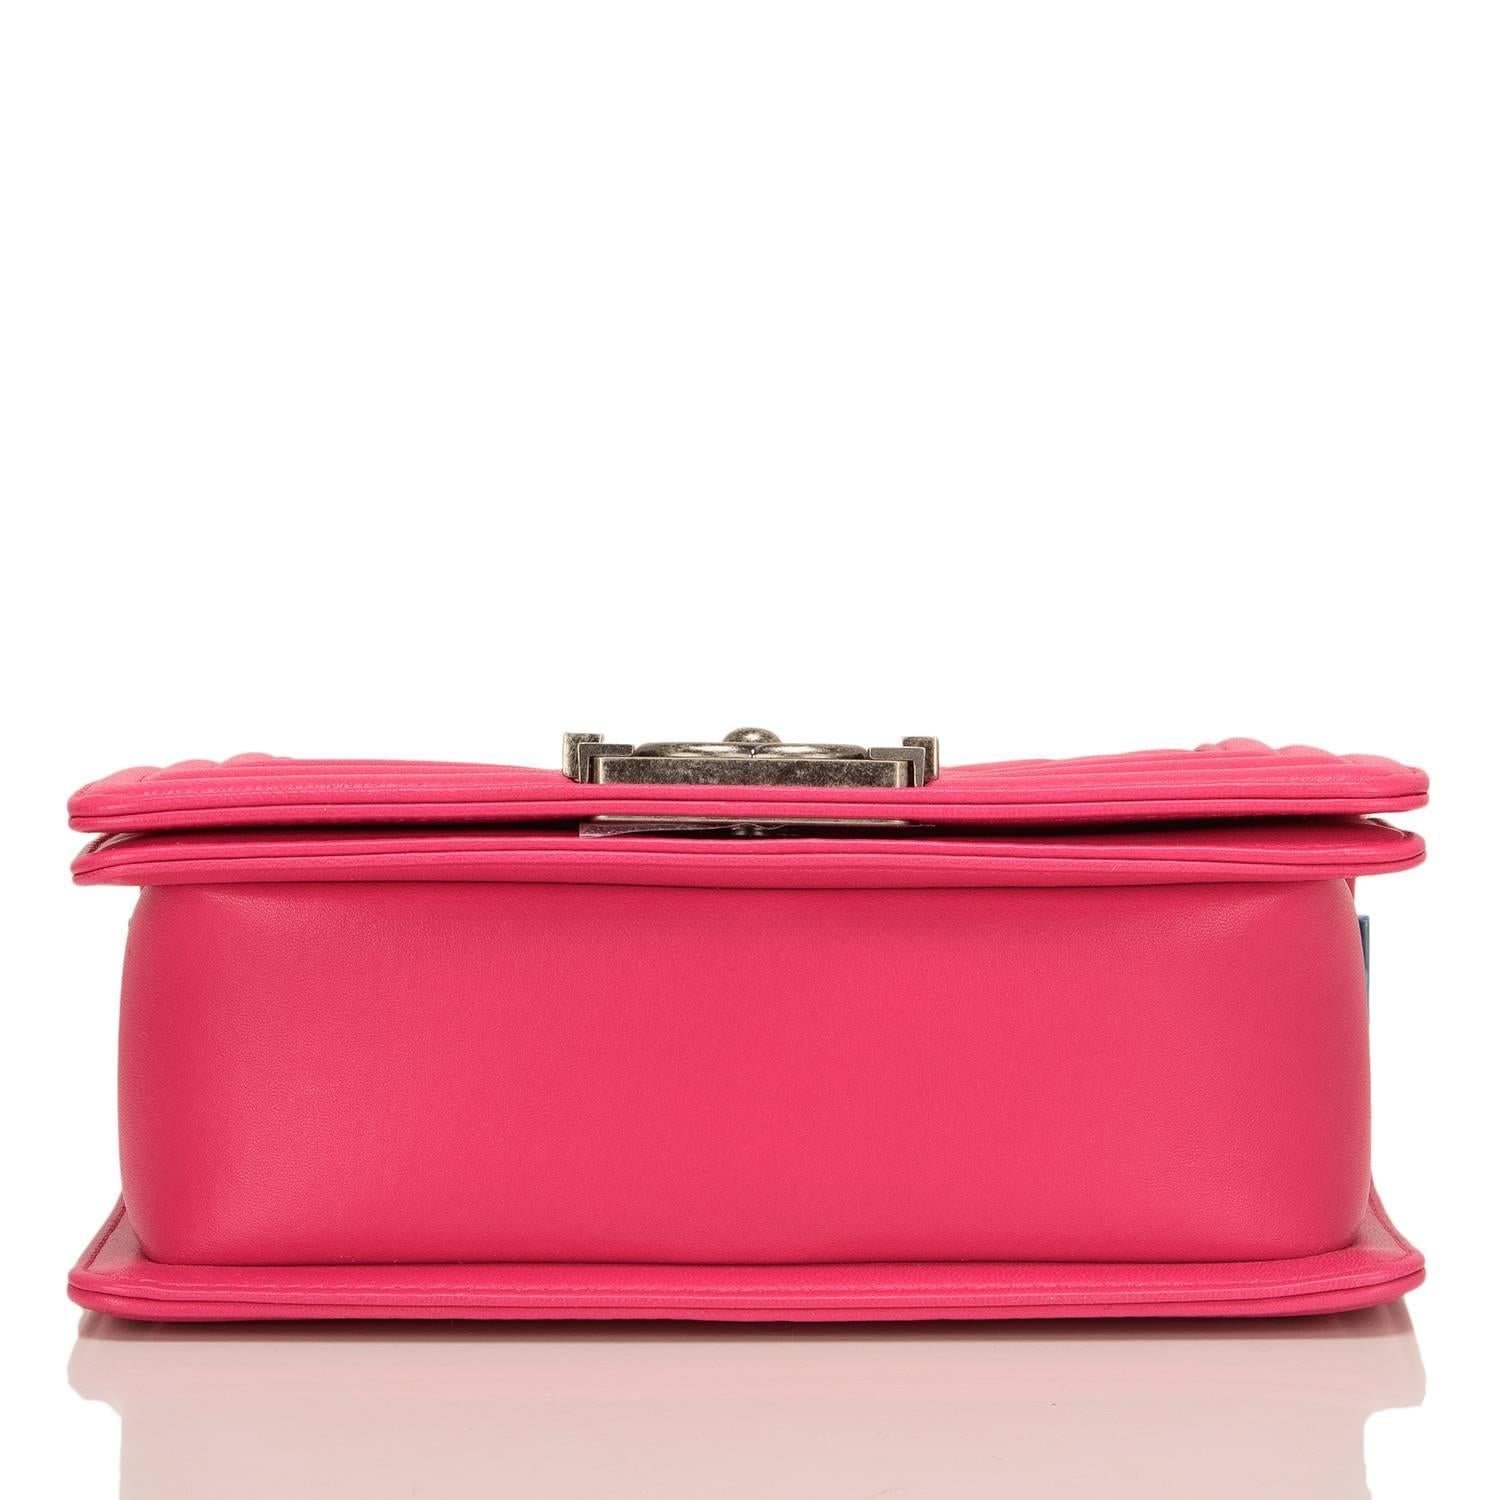 Chanel Fuchsia Pink Lambskin Small Boy Bag 1